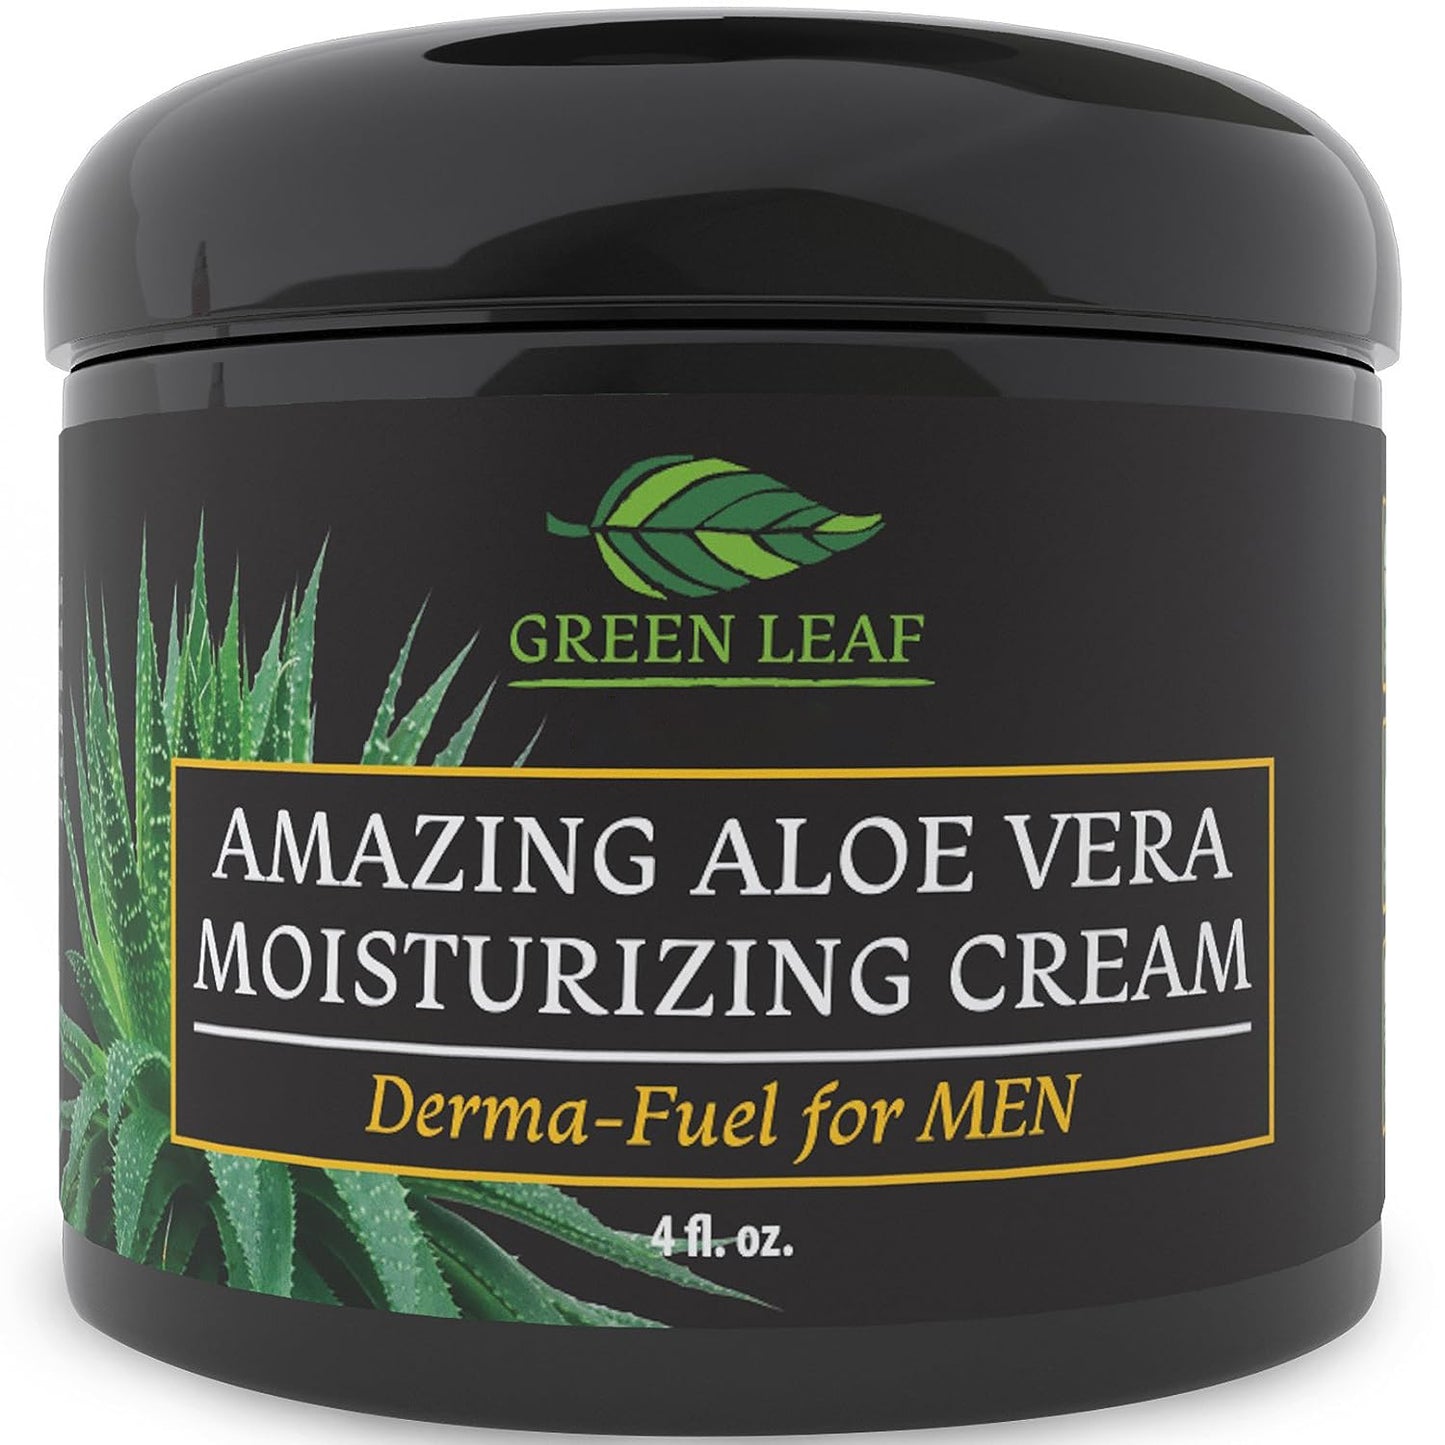 Moisturizing Cream for Men by Amazing Aloe Vera